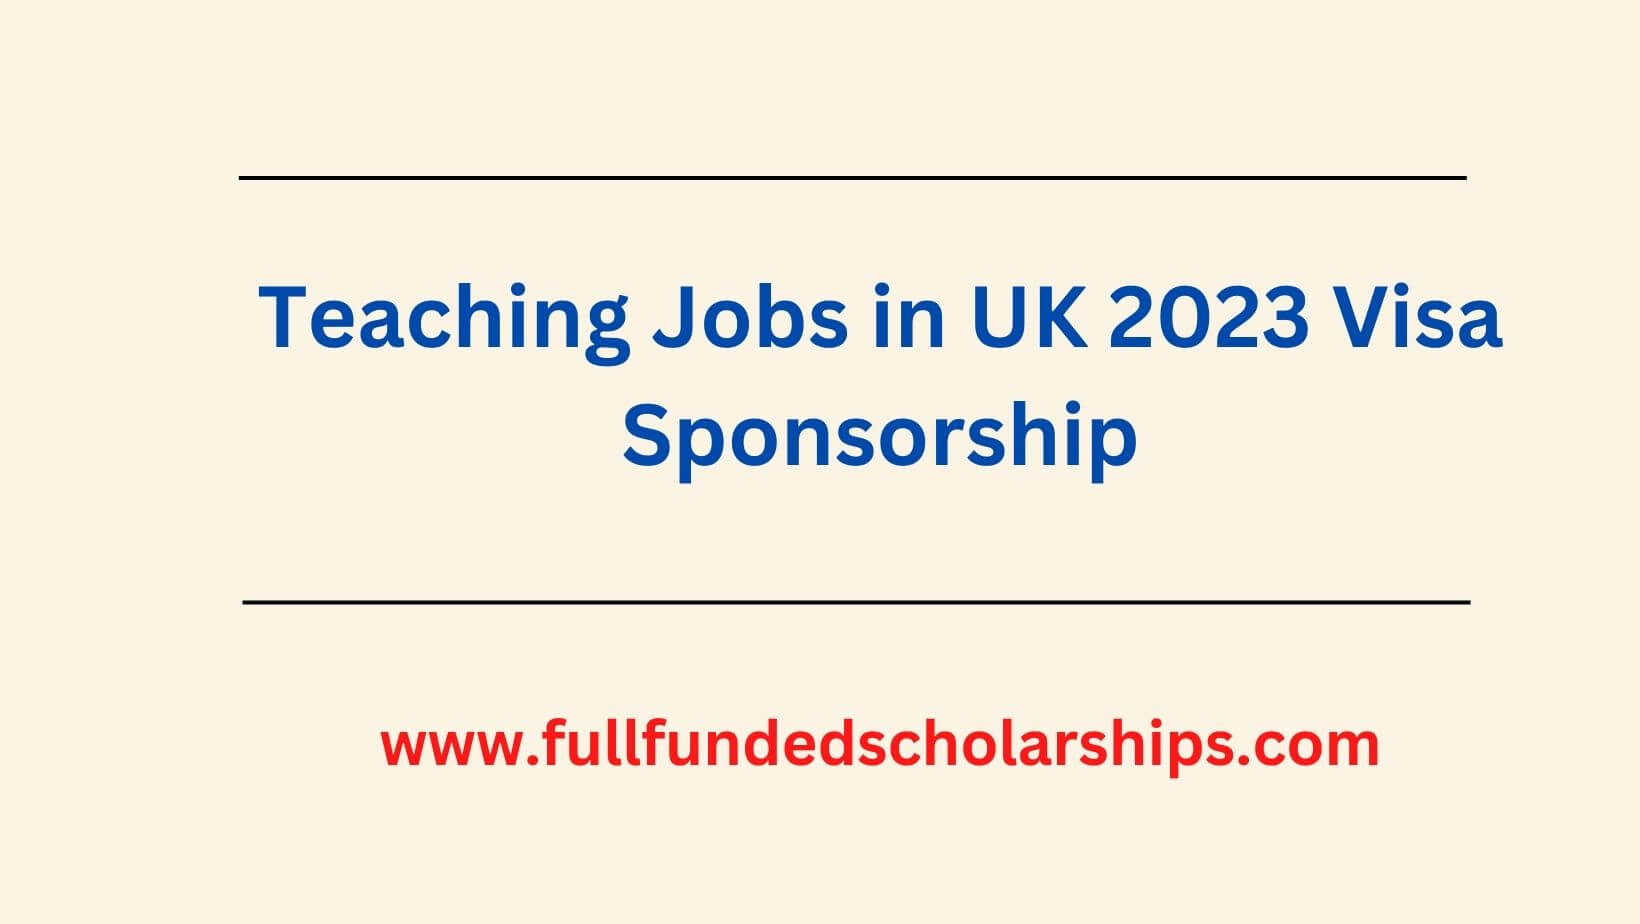 Teaching Jobs in UK 2023 Visa Sponsorship